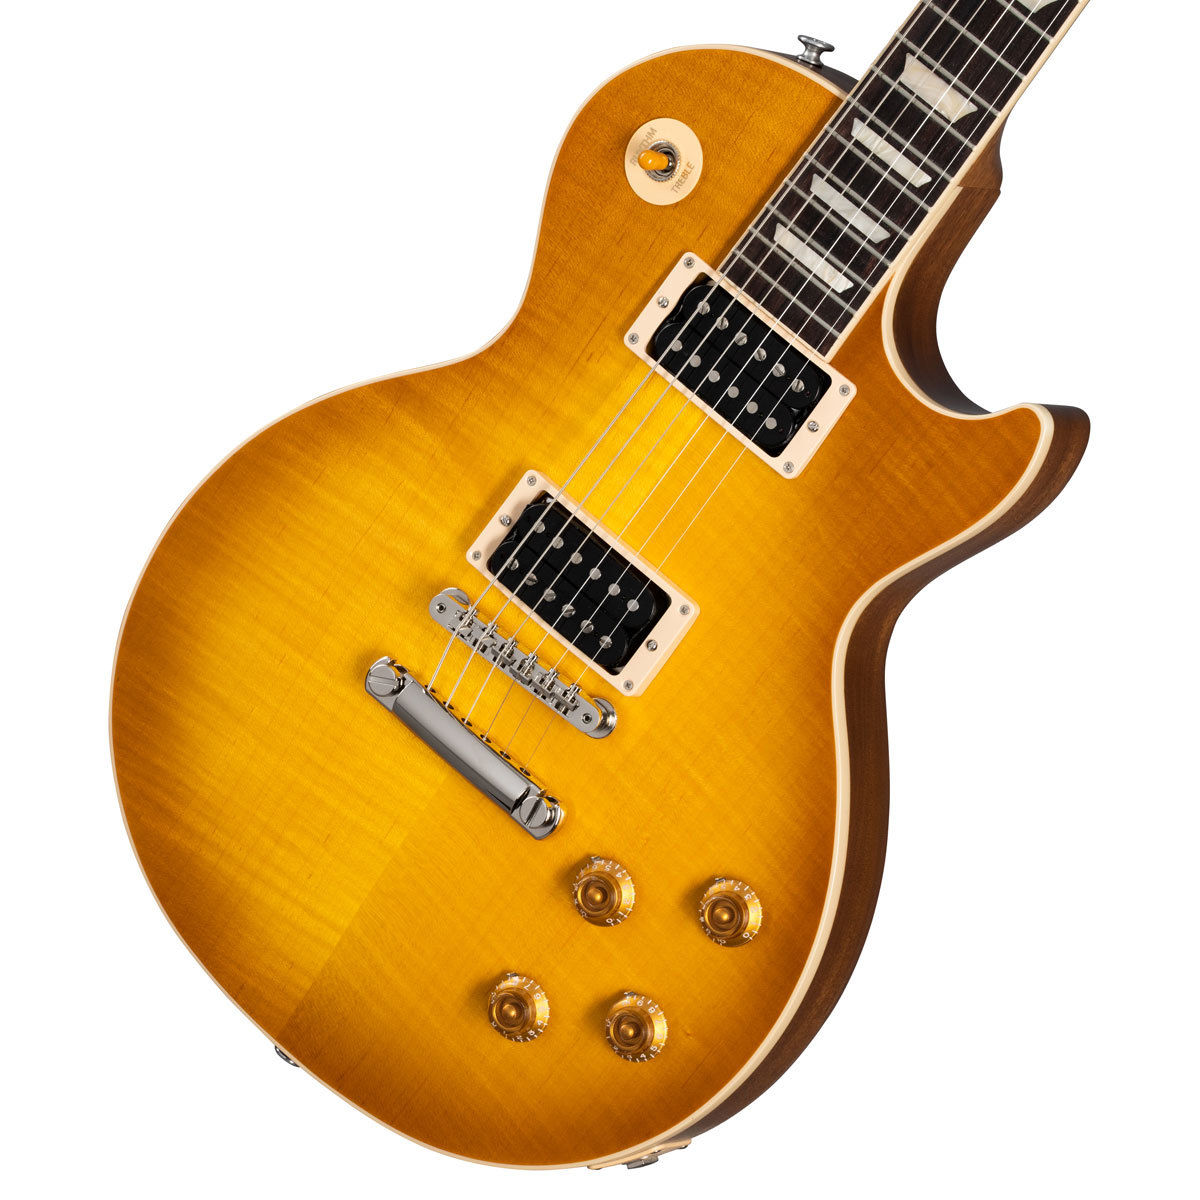 Gibson Les Paul Standard レスポール スタンダード - エレキギター